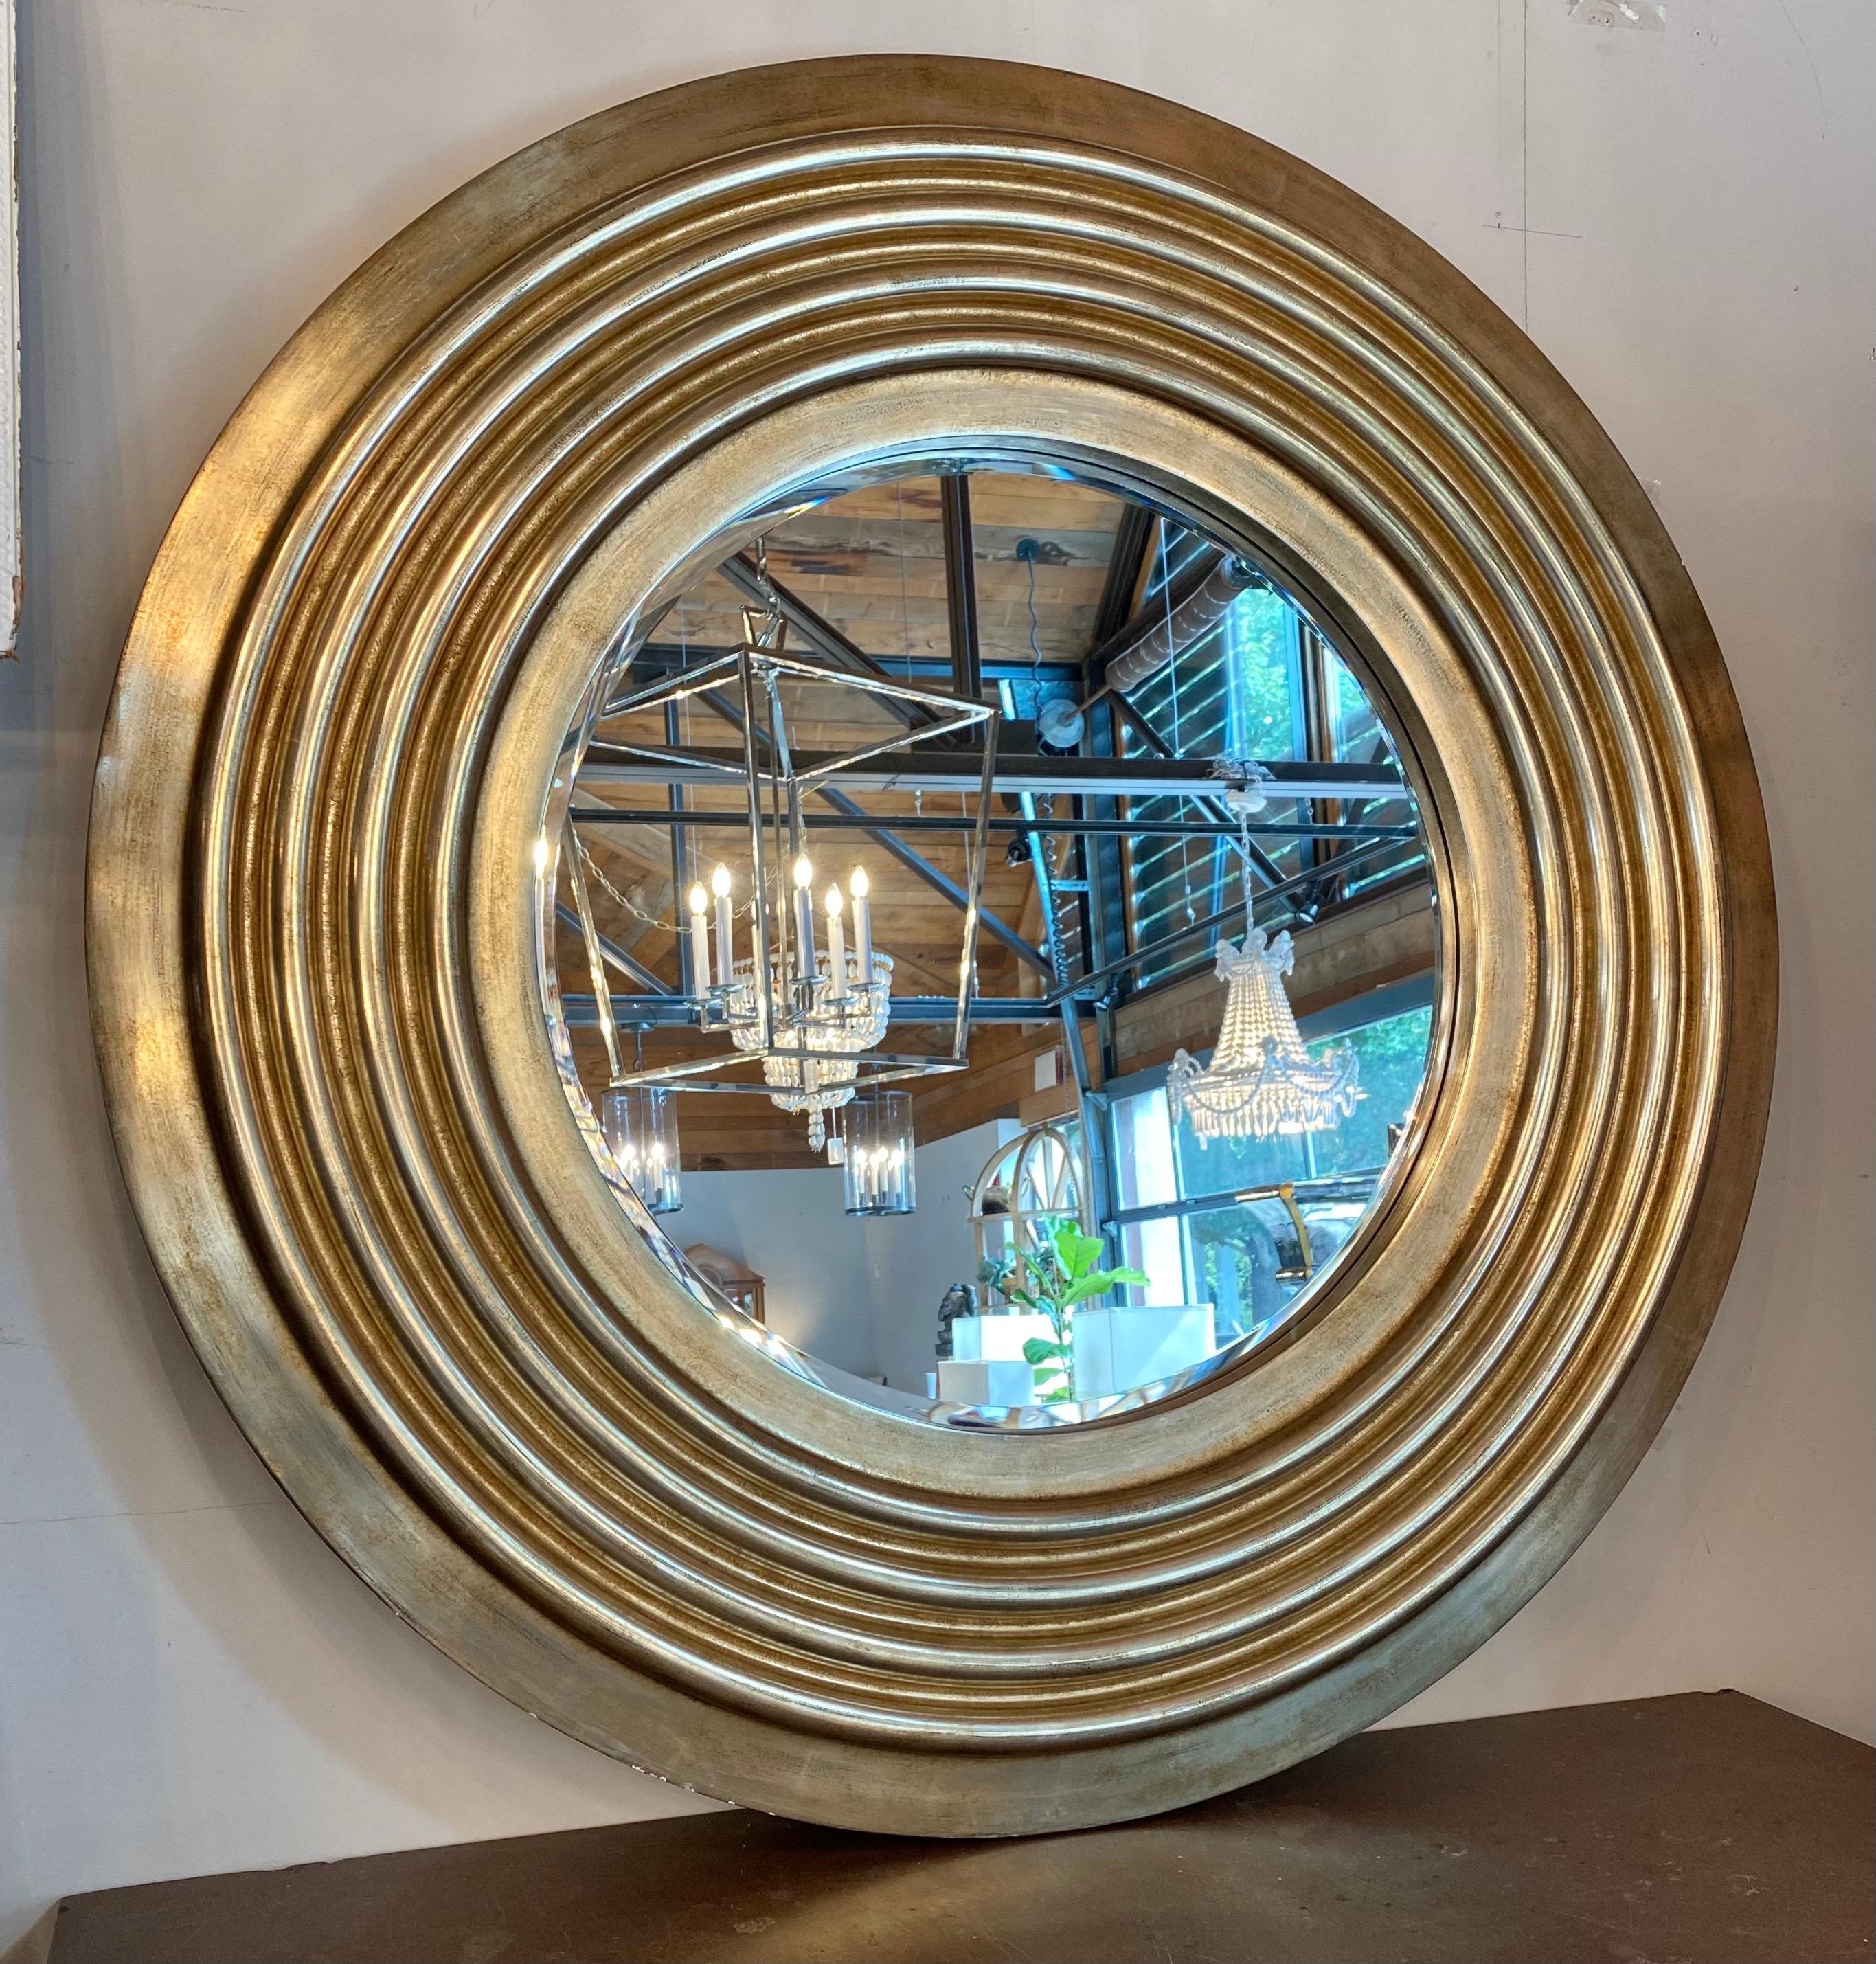 Large round mirror in silver leaf (Nancy Corzine)

Measures: 44